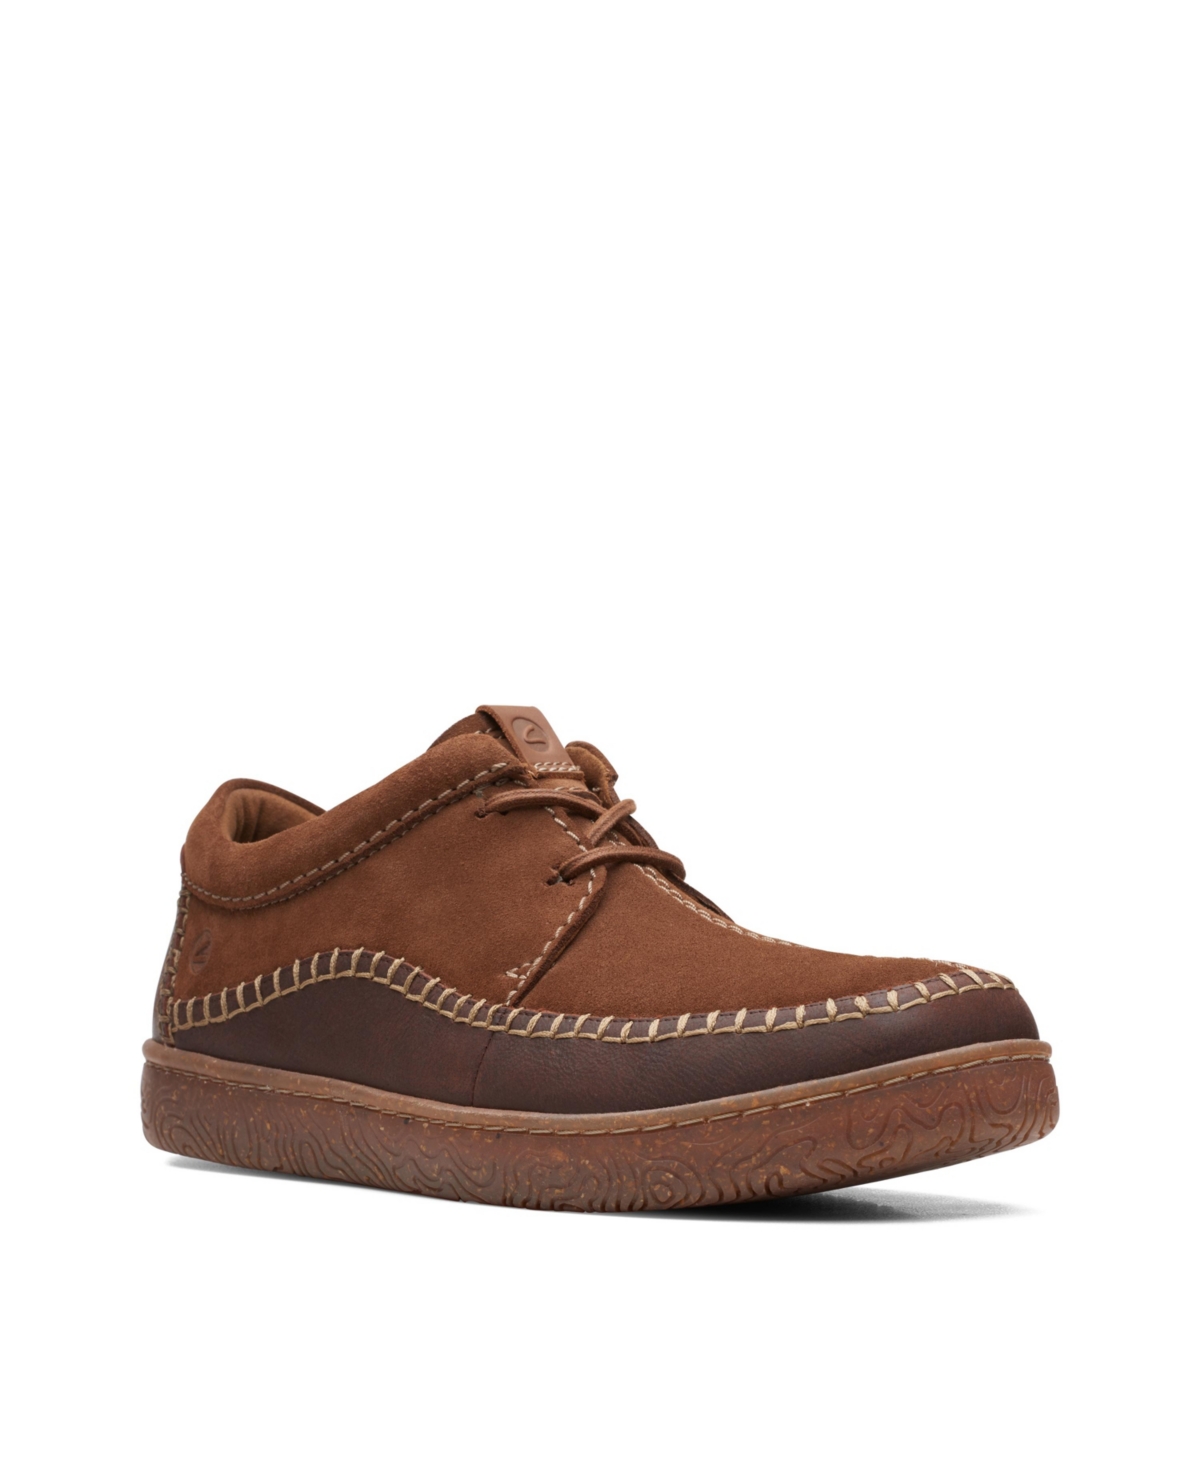 Clarks Men's Collection Hodson Seam Comfort Shoes In Dark Brown Suede